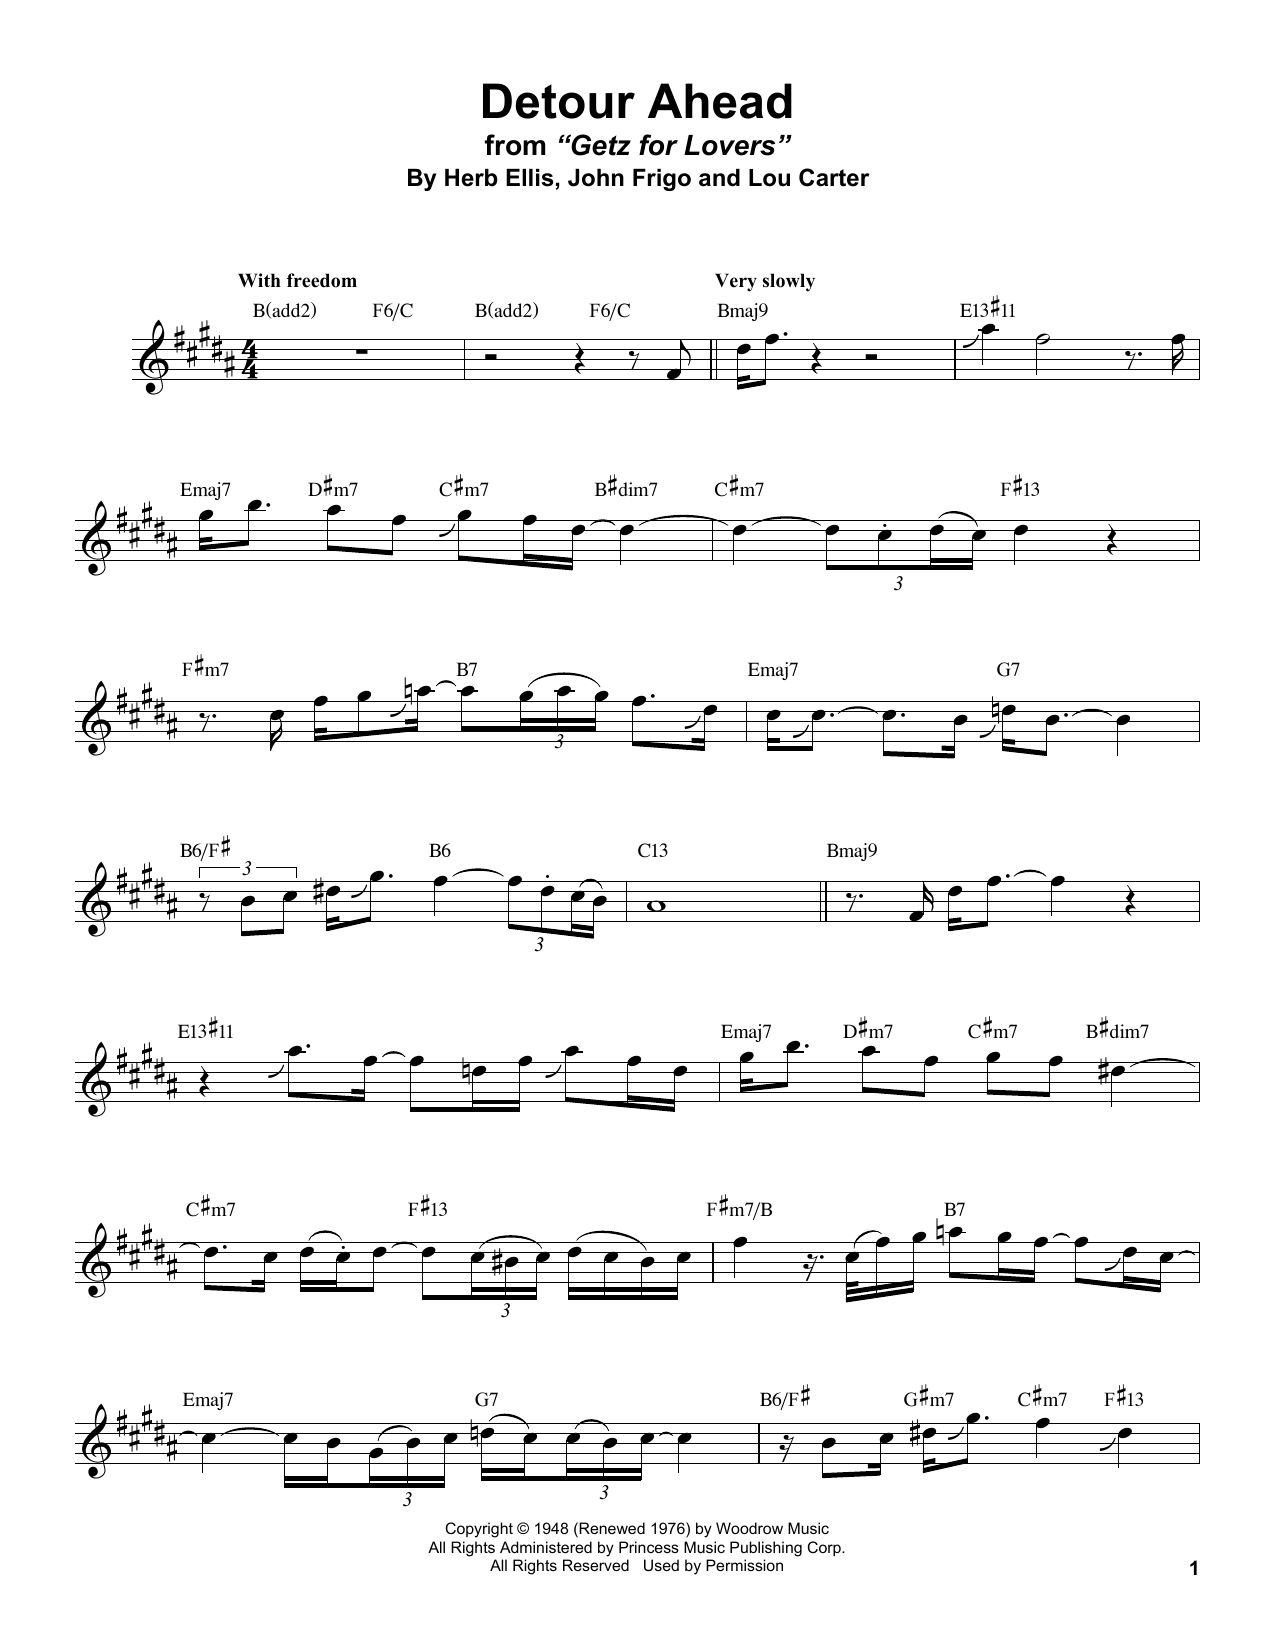 Stan Getz Detour Ahead Sheet Music Notes & Chords for Tenor Sax Transcription - Download or Print PDF